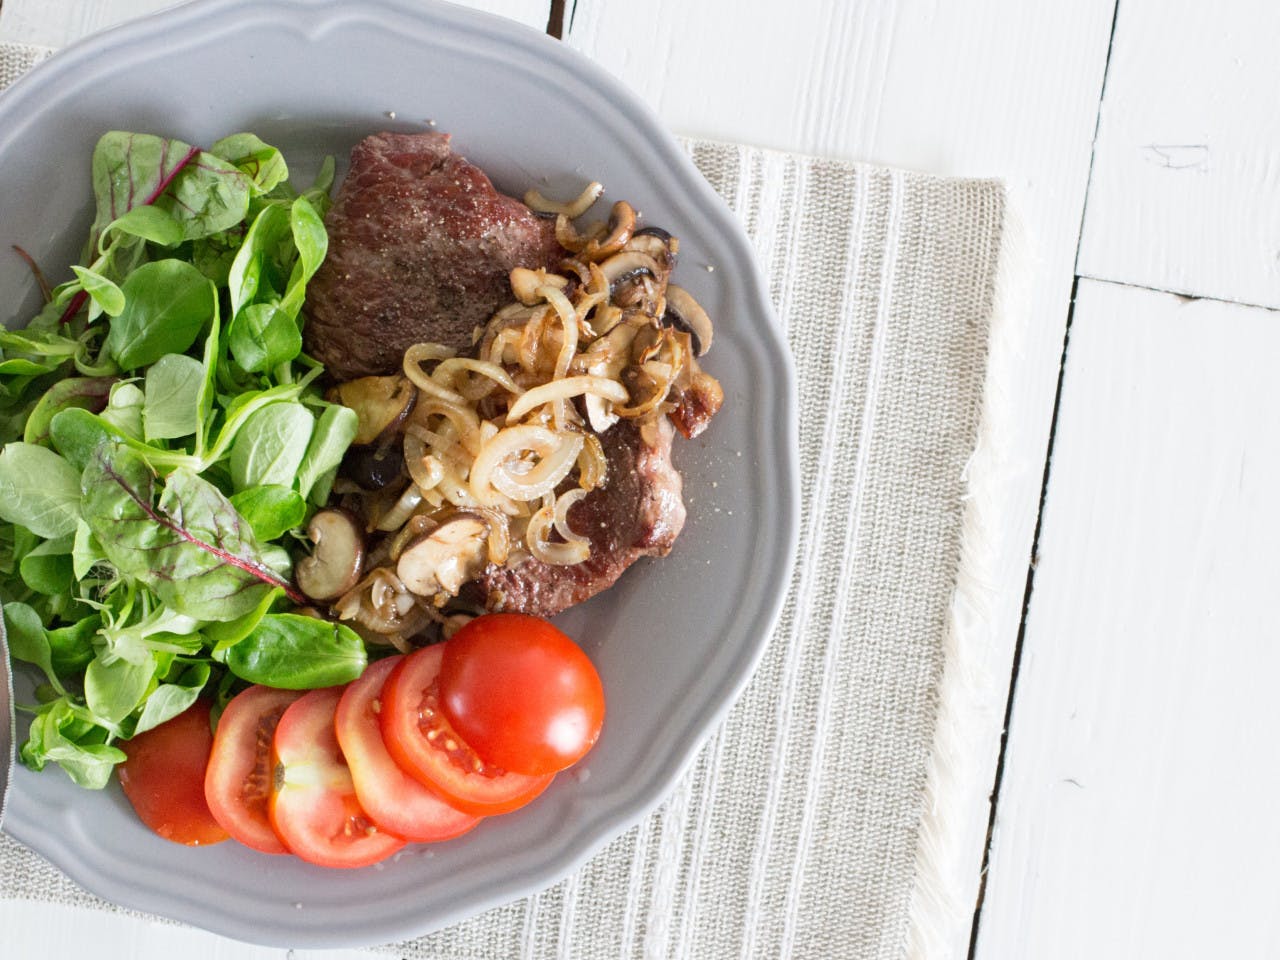 Porterhouse steak with onion and mushrooms